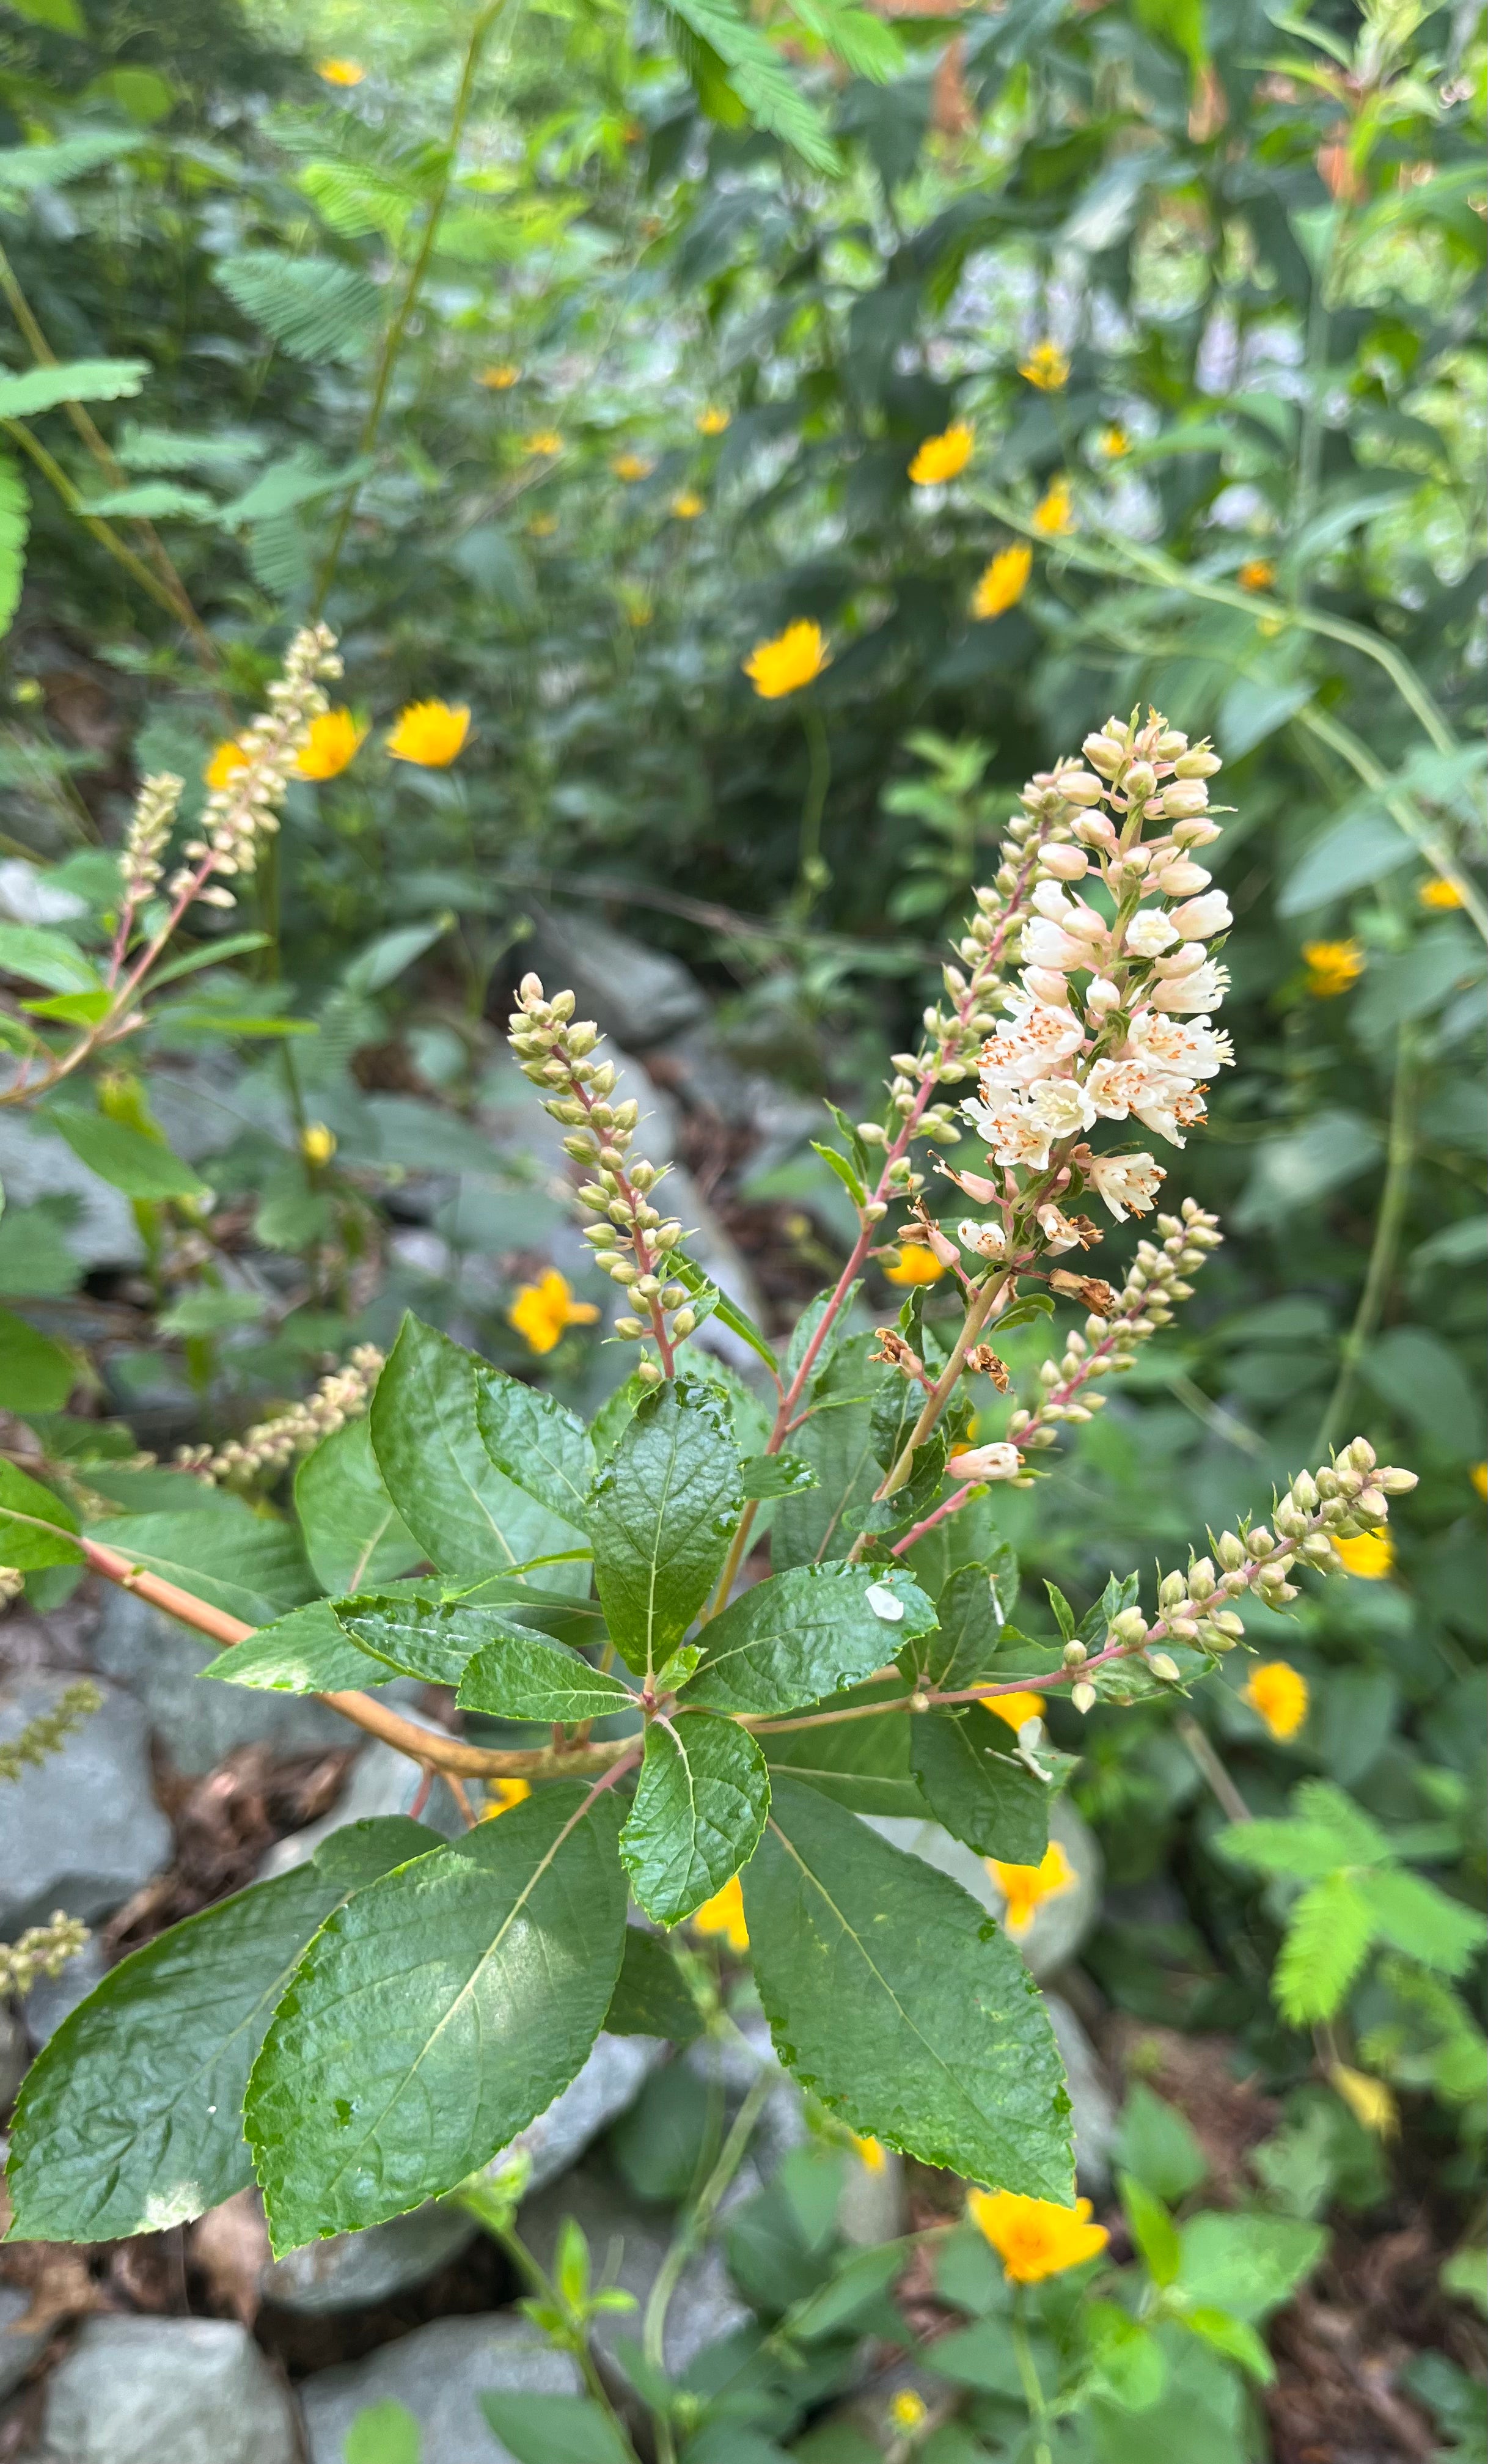 Clethra alnifolia / Sweet Pepperbush (Clethra Family)